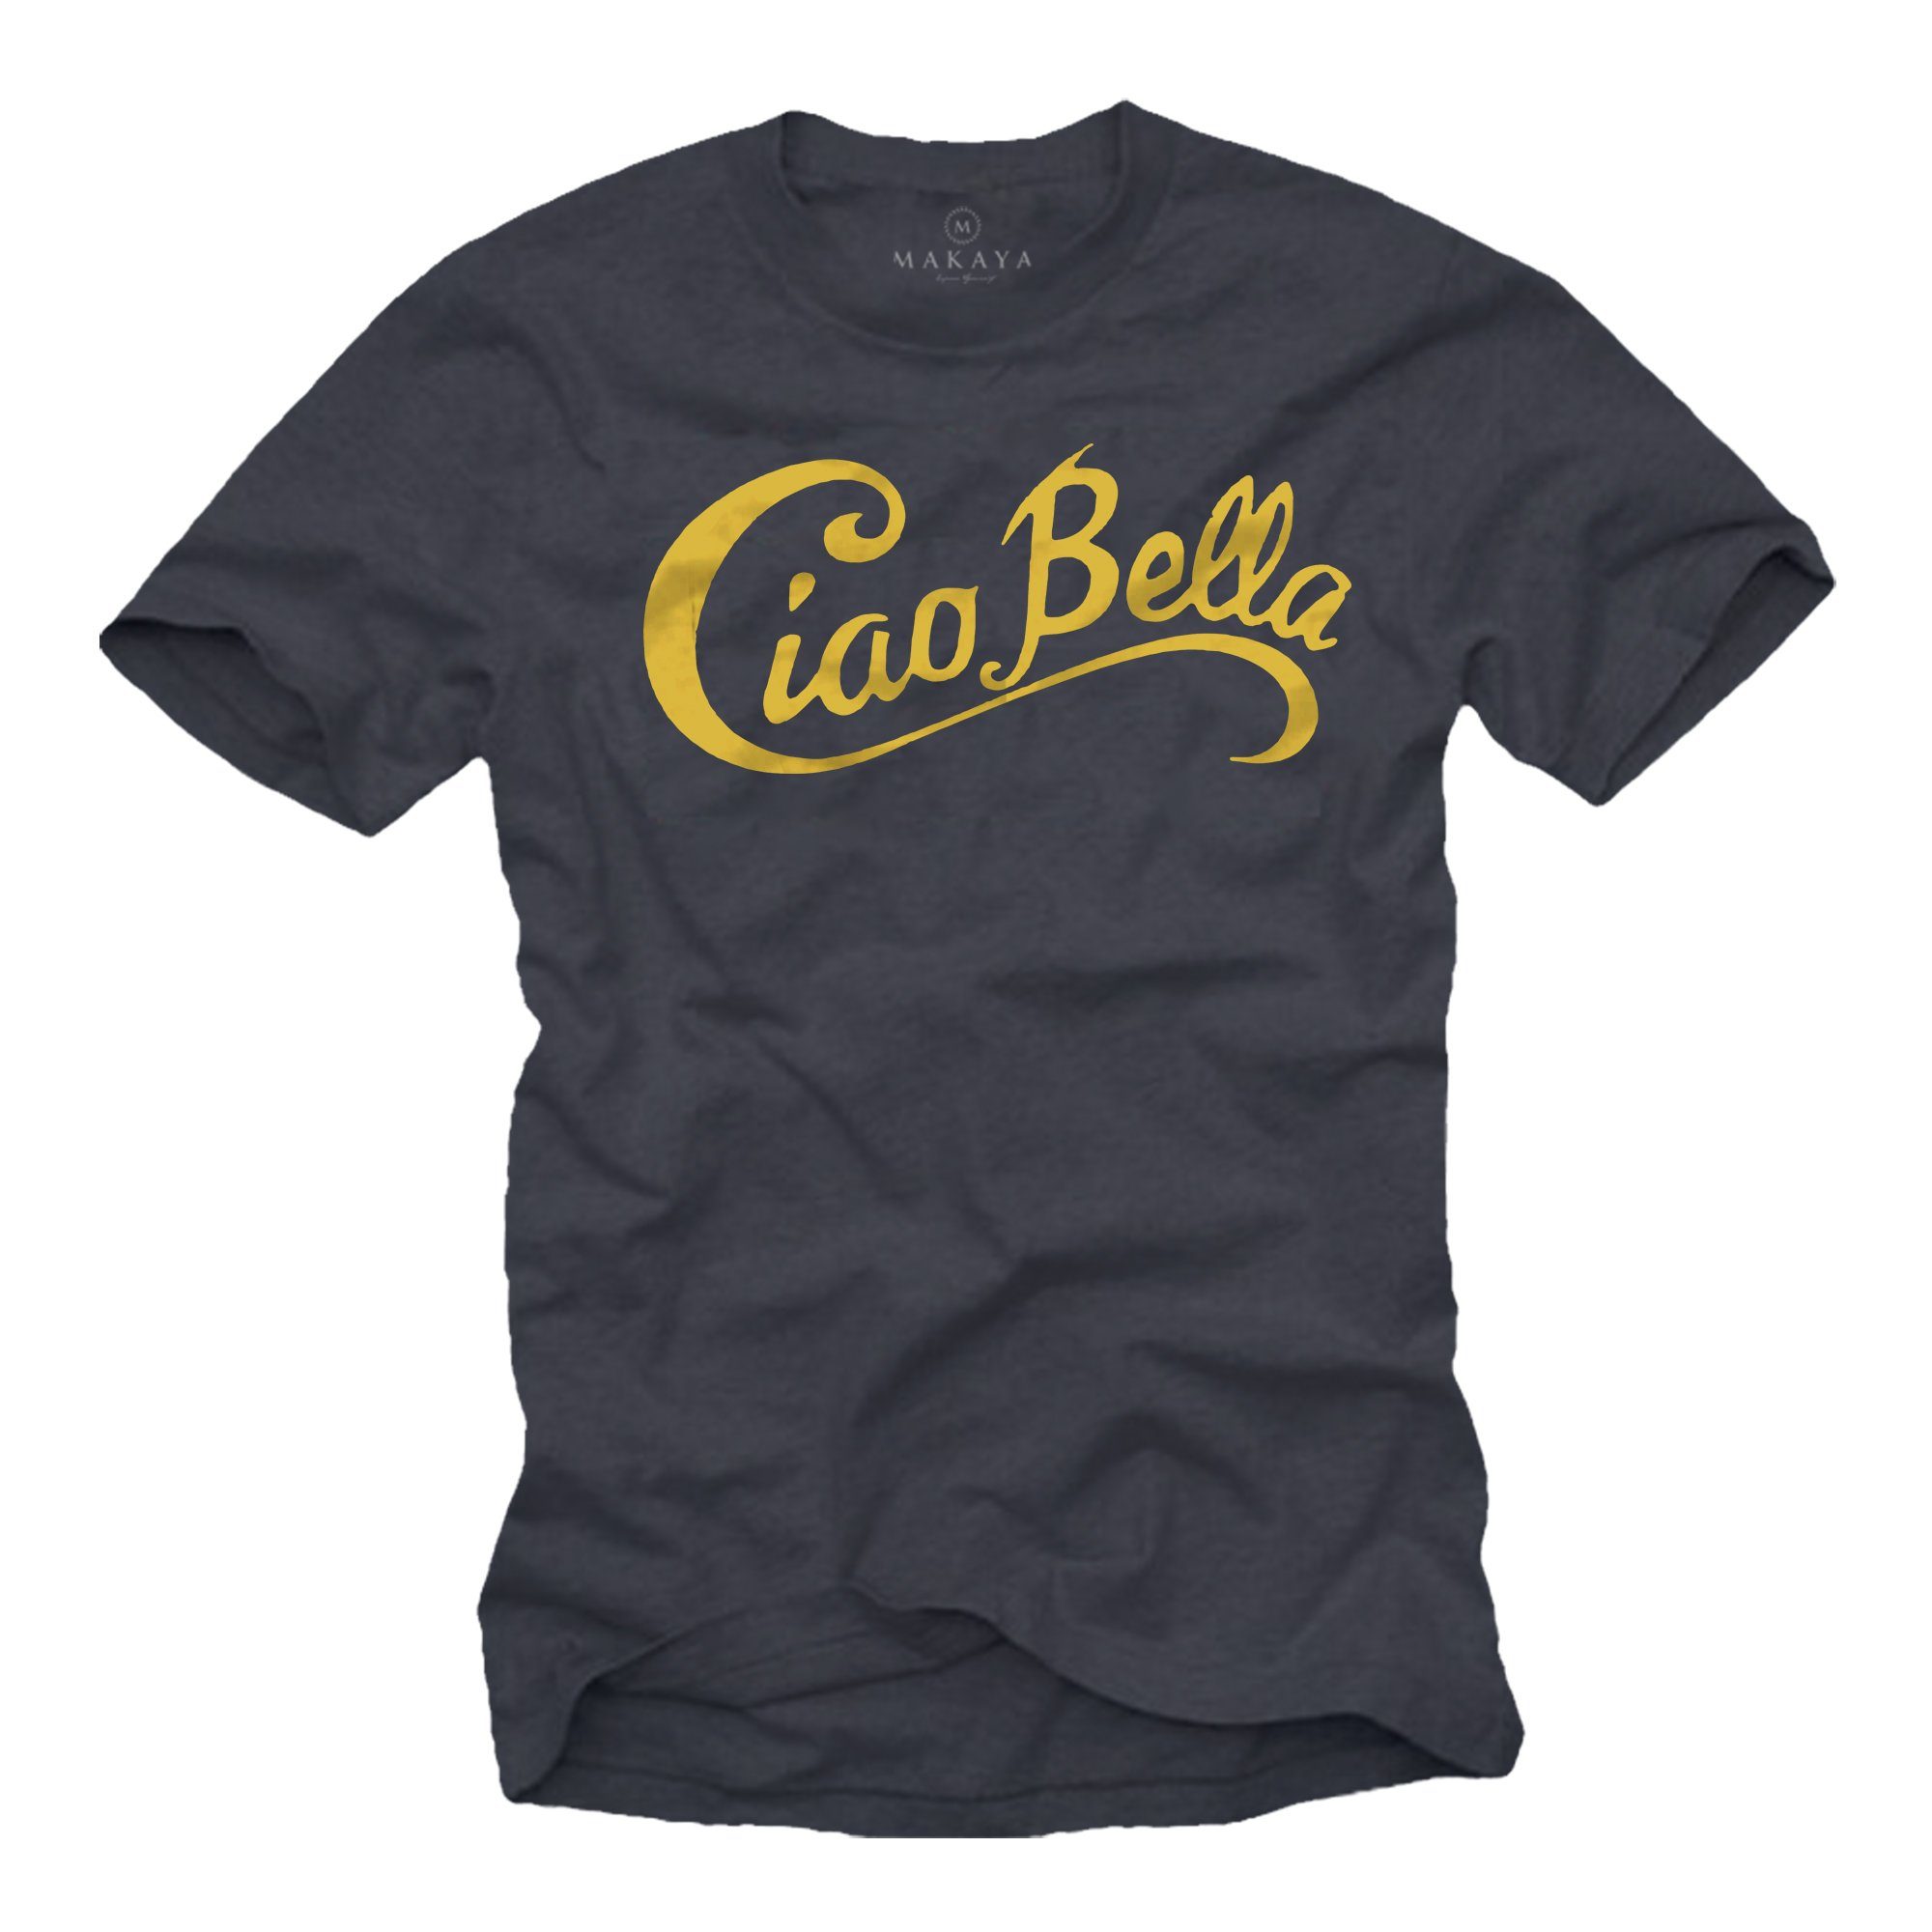 Coole Italien Print-Shirt Motiv Style Herren Logo, Blaugrau Bella Spruch Italienischer Mode Ciao MAKAYA